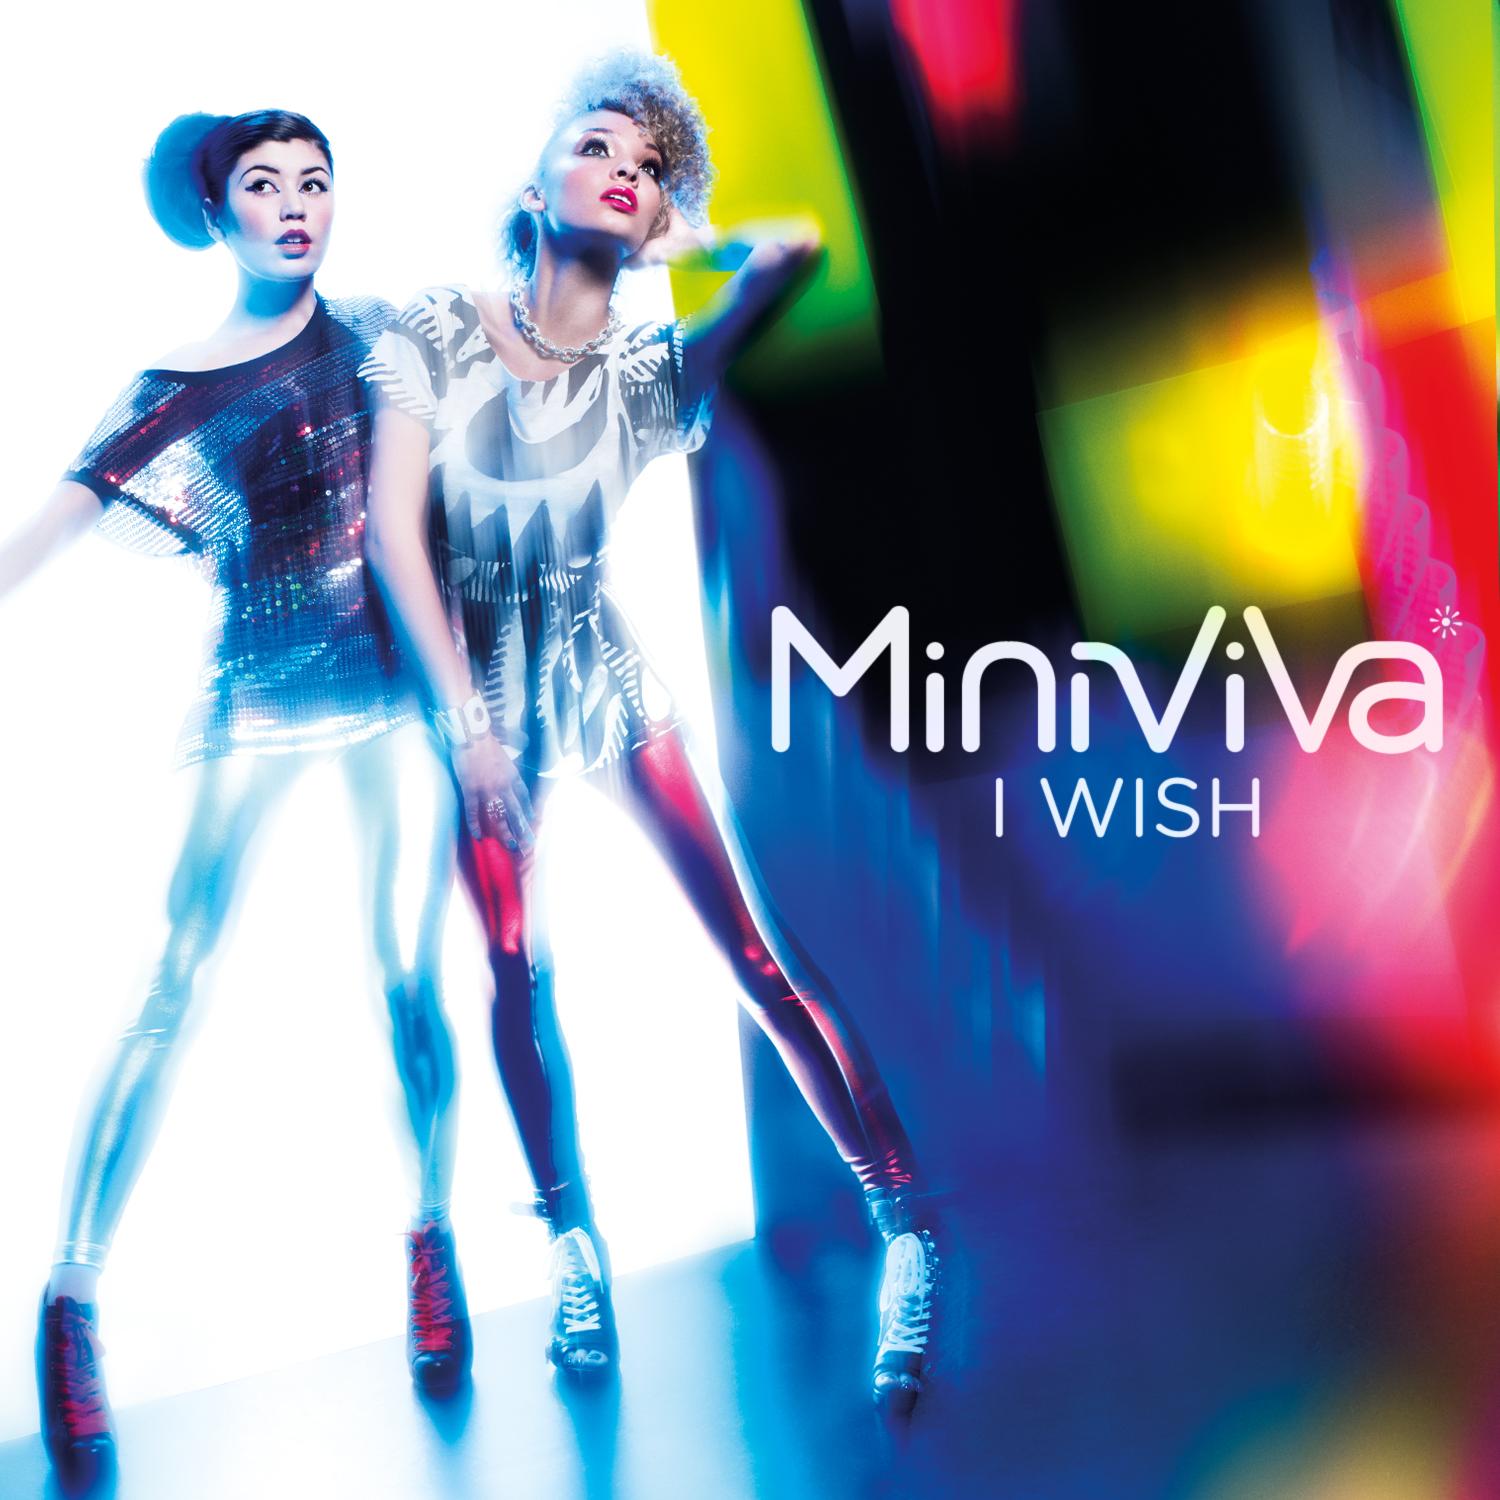 Mini Viva • I Wish